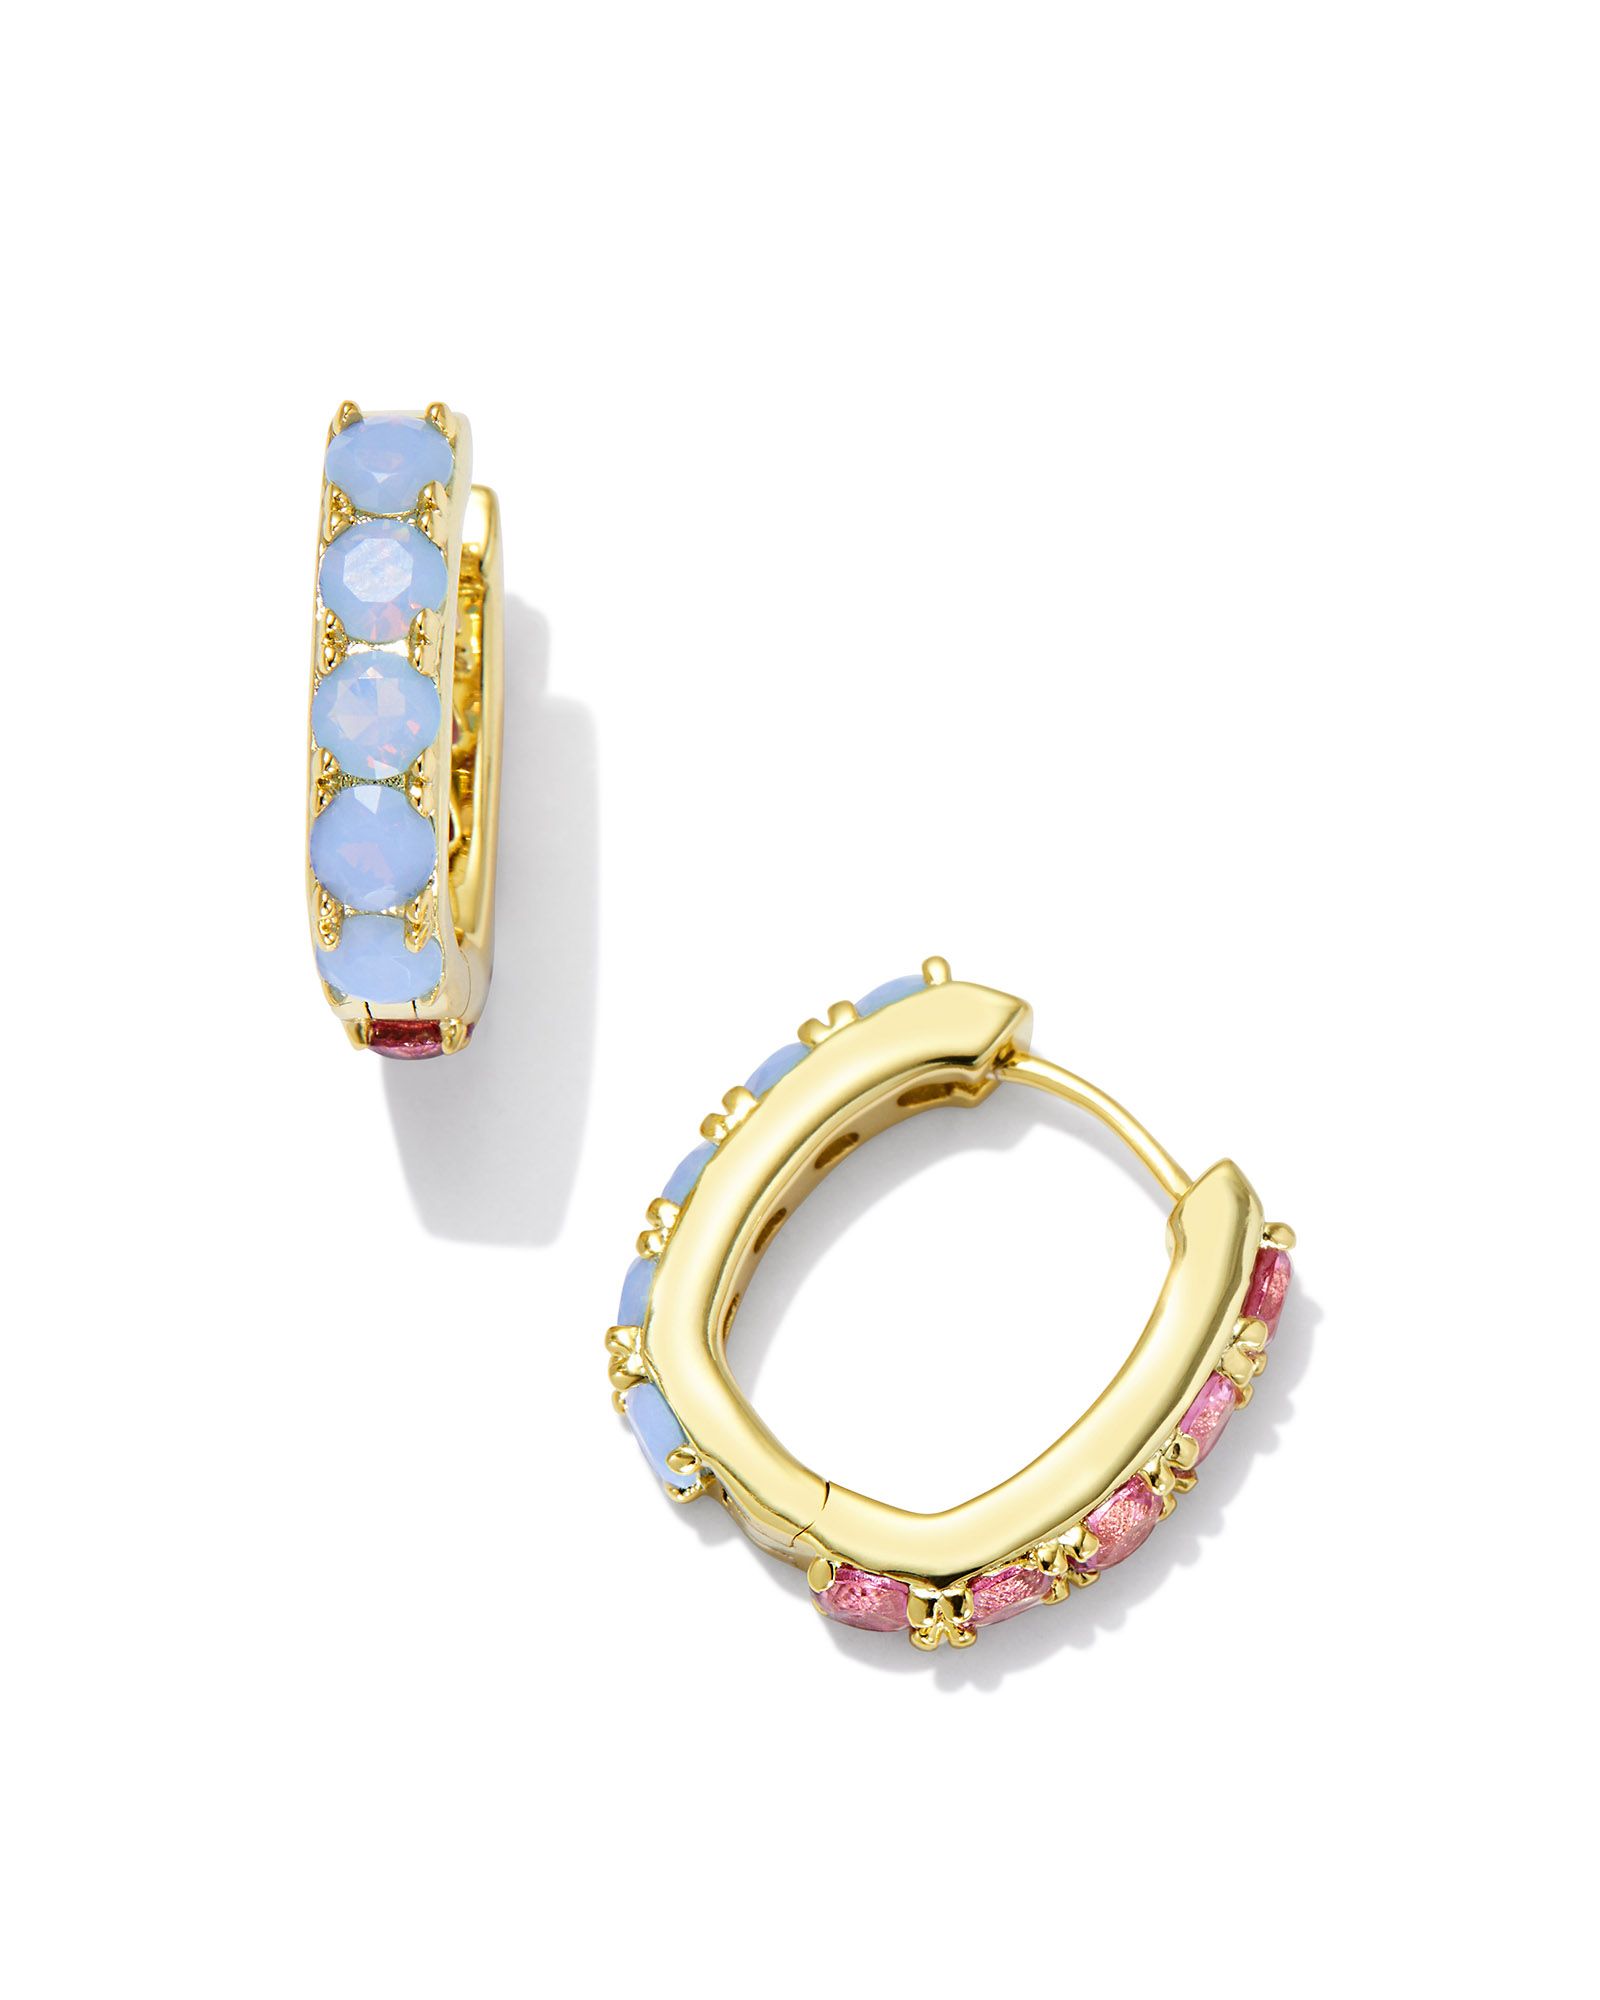 Chandler Gold Huggie Earrings in Pink Blue Mix | Kendra Scott